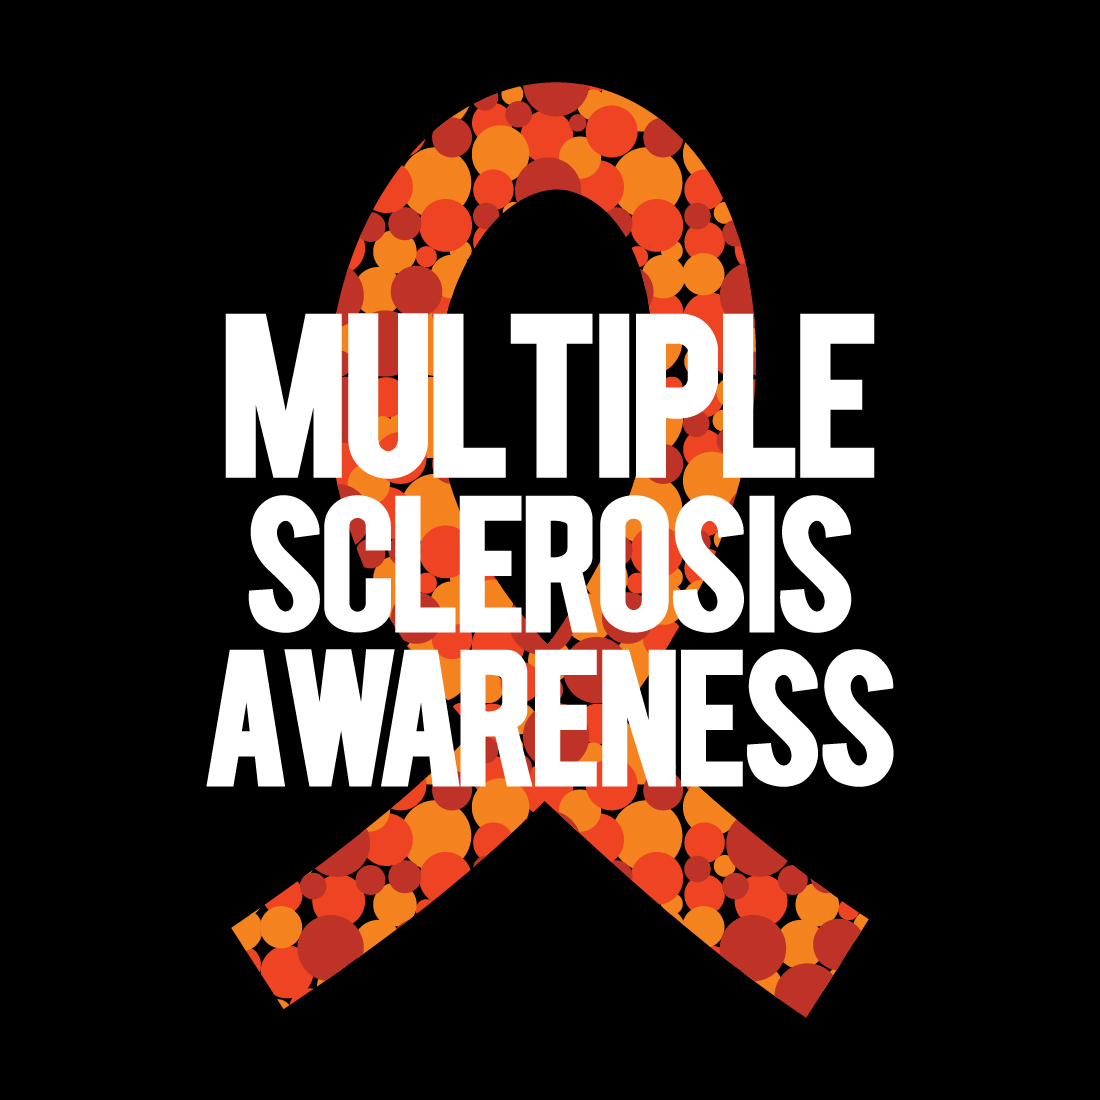 Multiple sclerrosis awareness sticker on a black background.